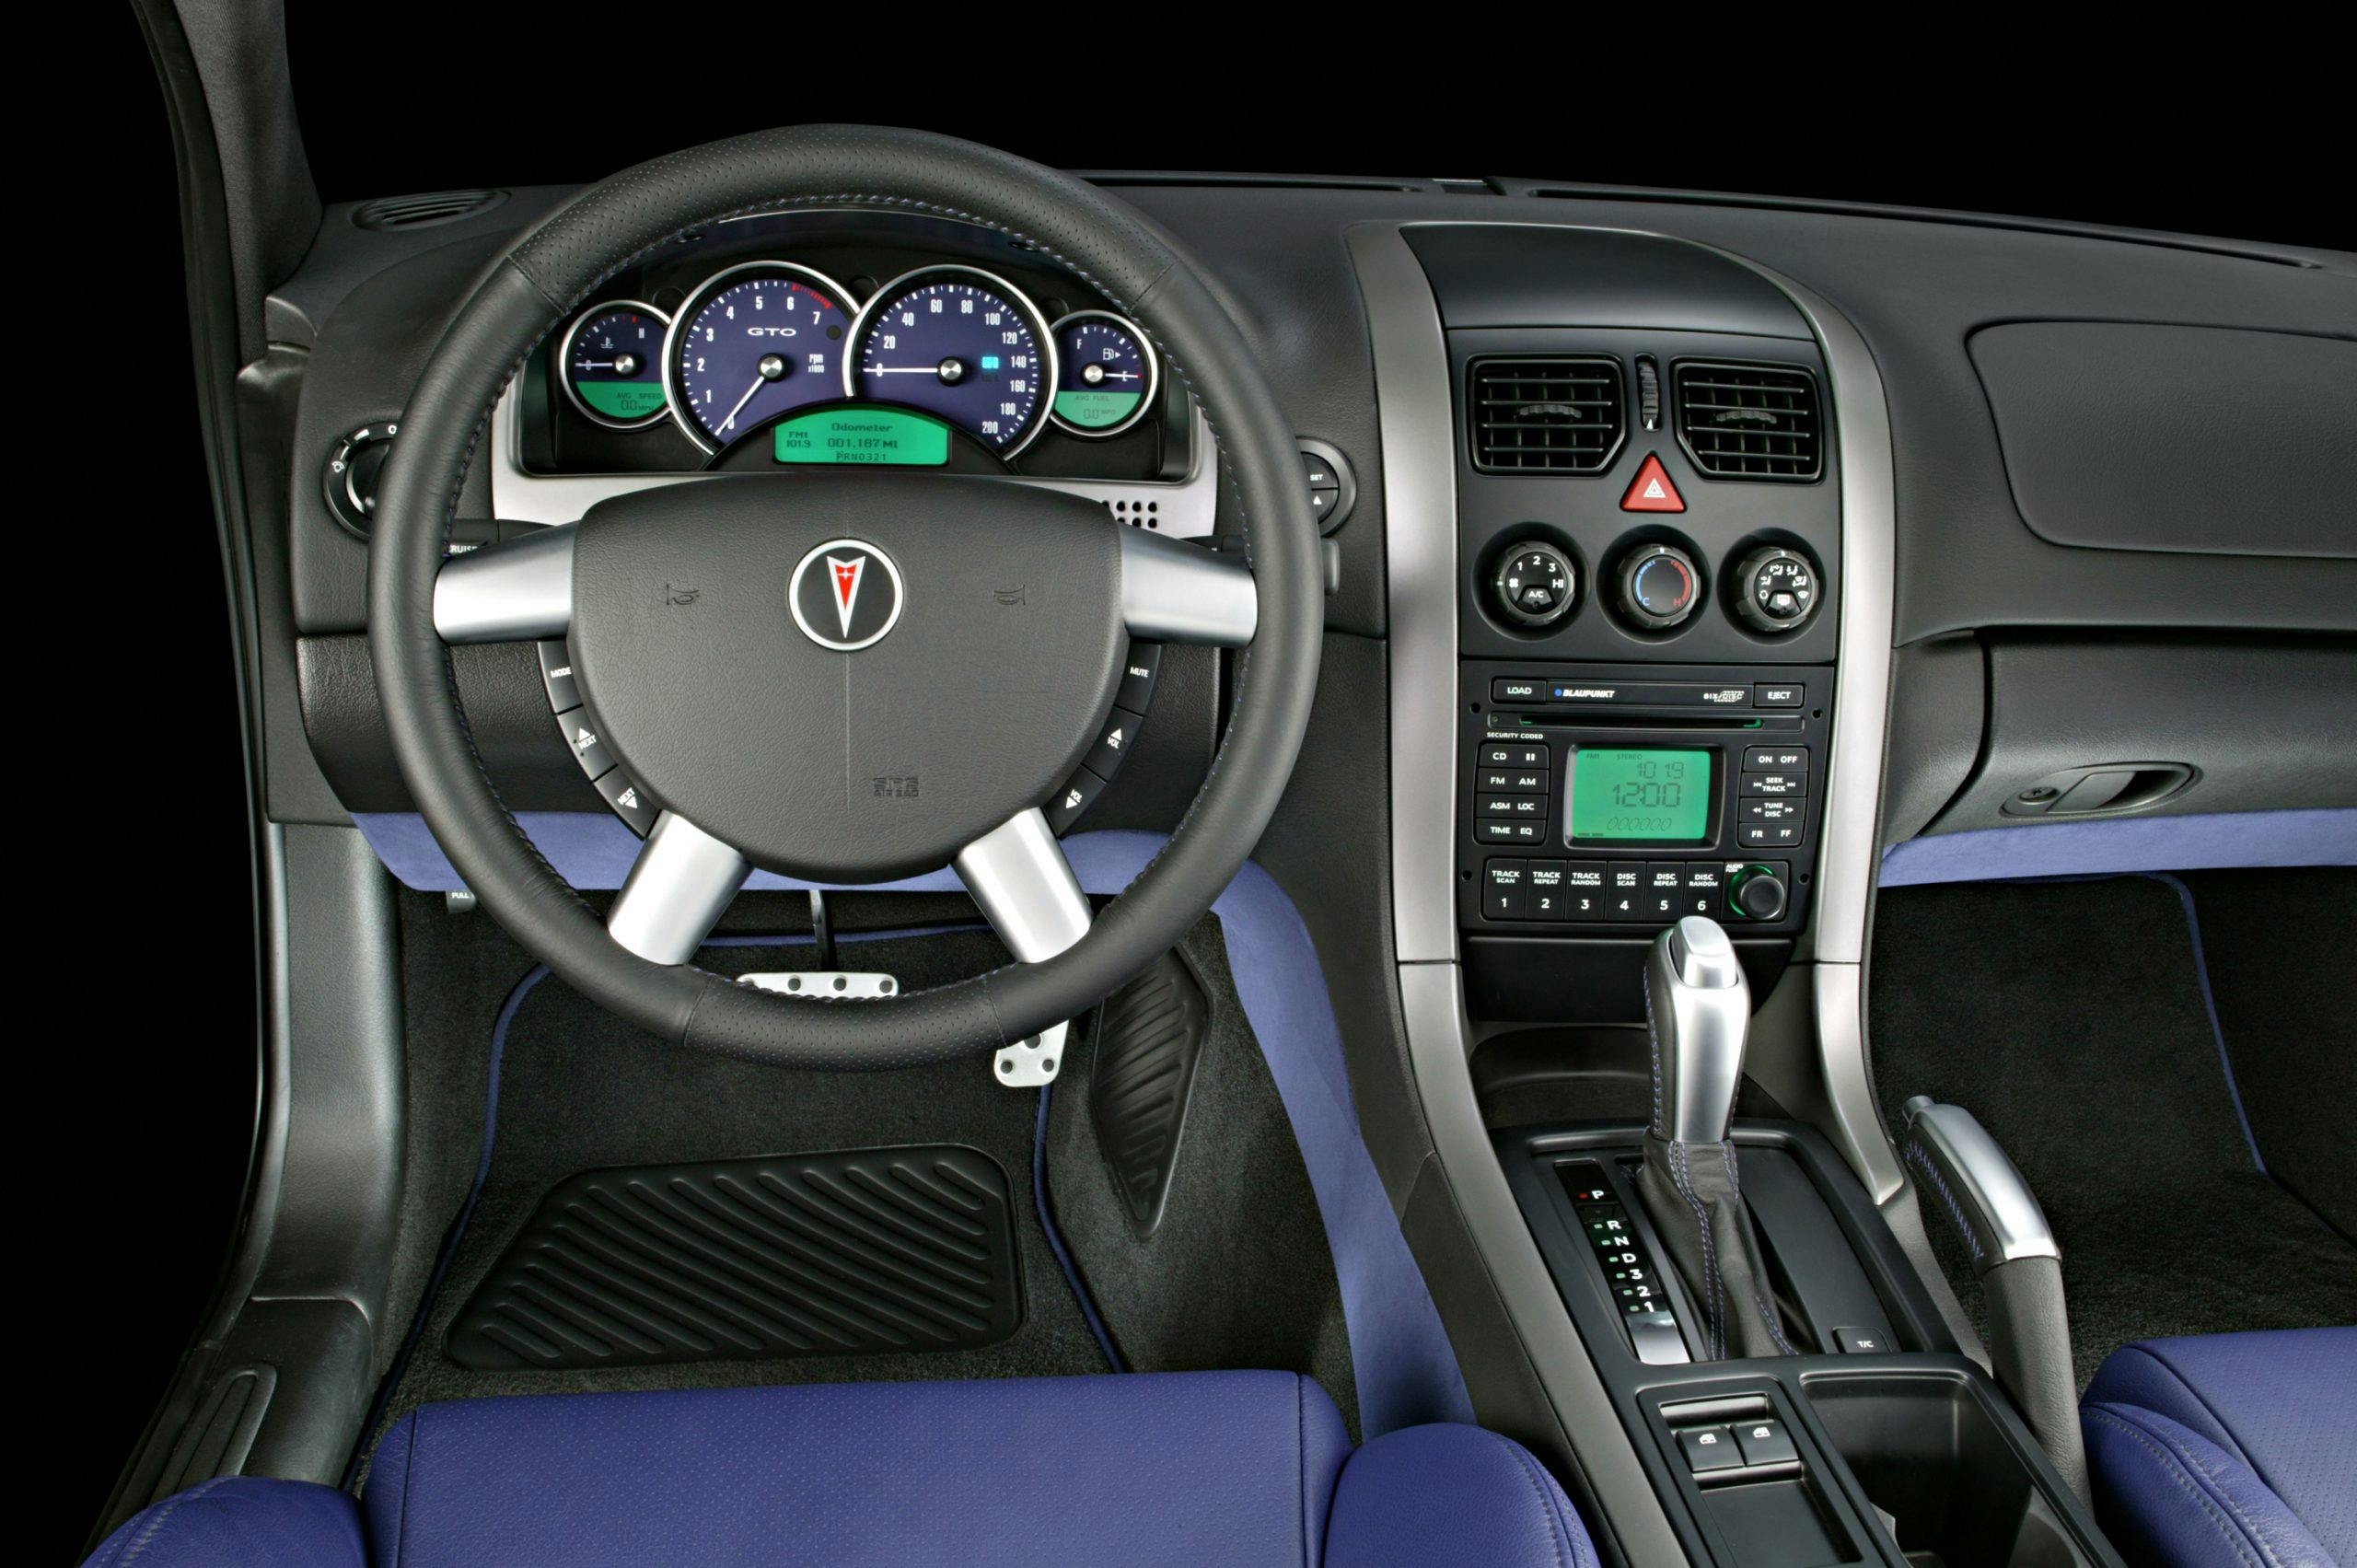 2004 Pontiac GTO interior front